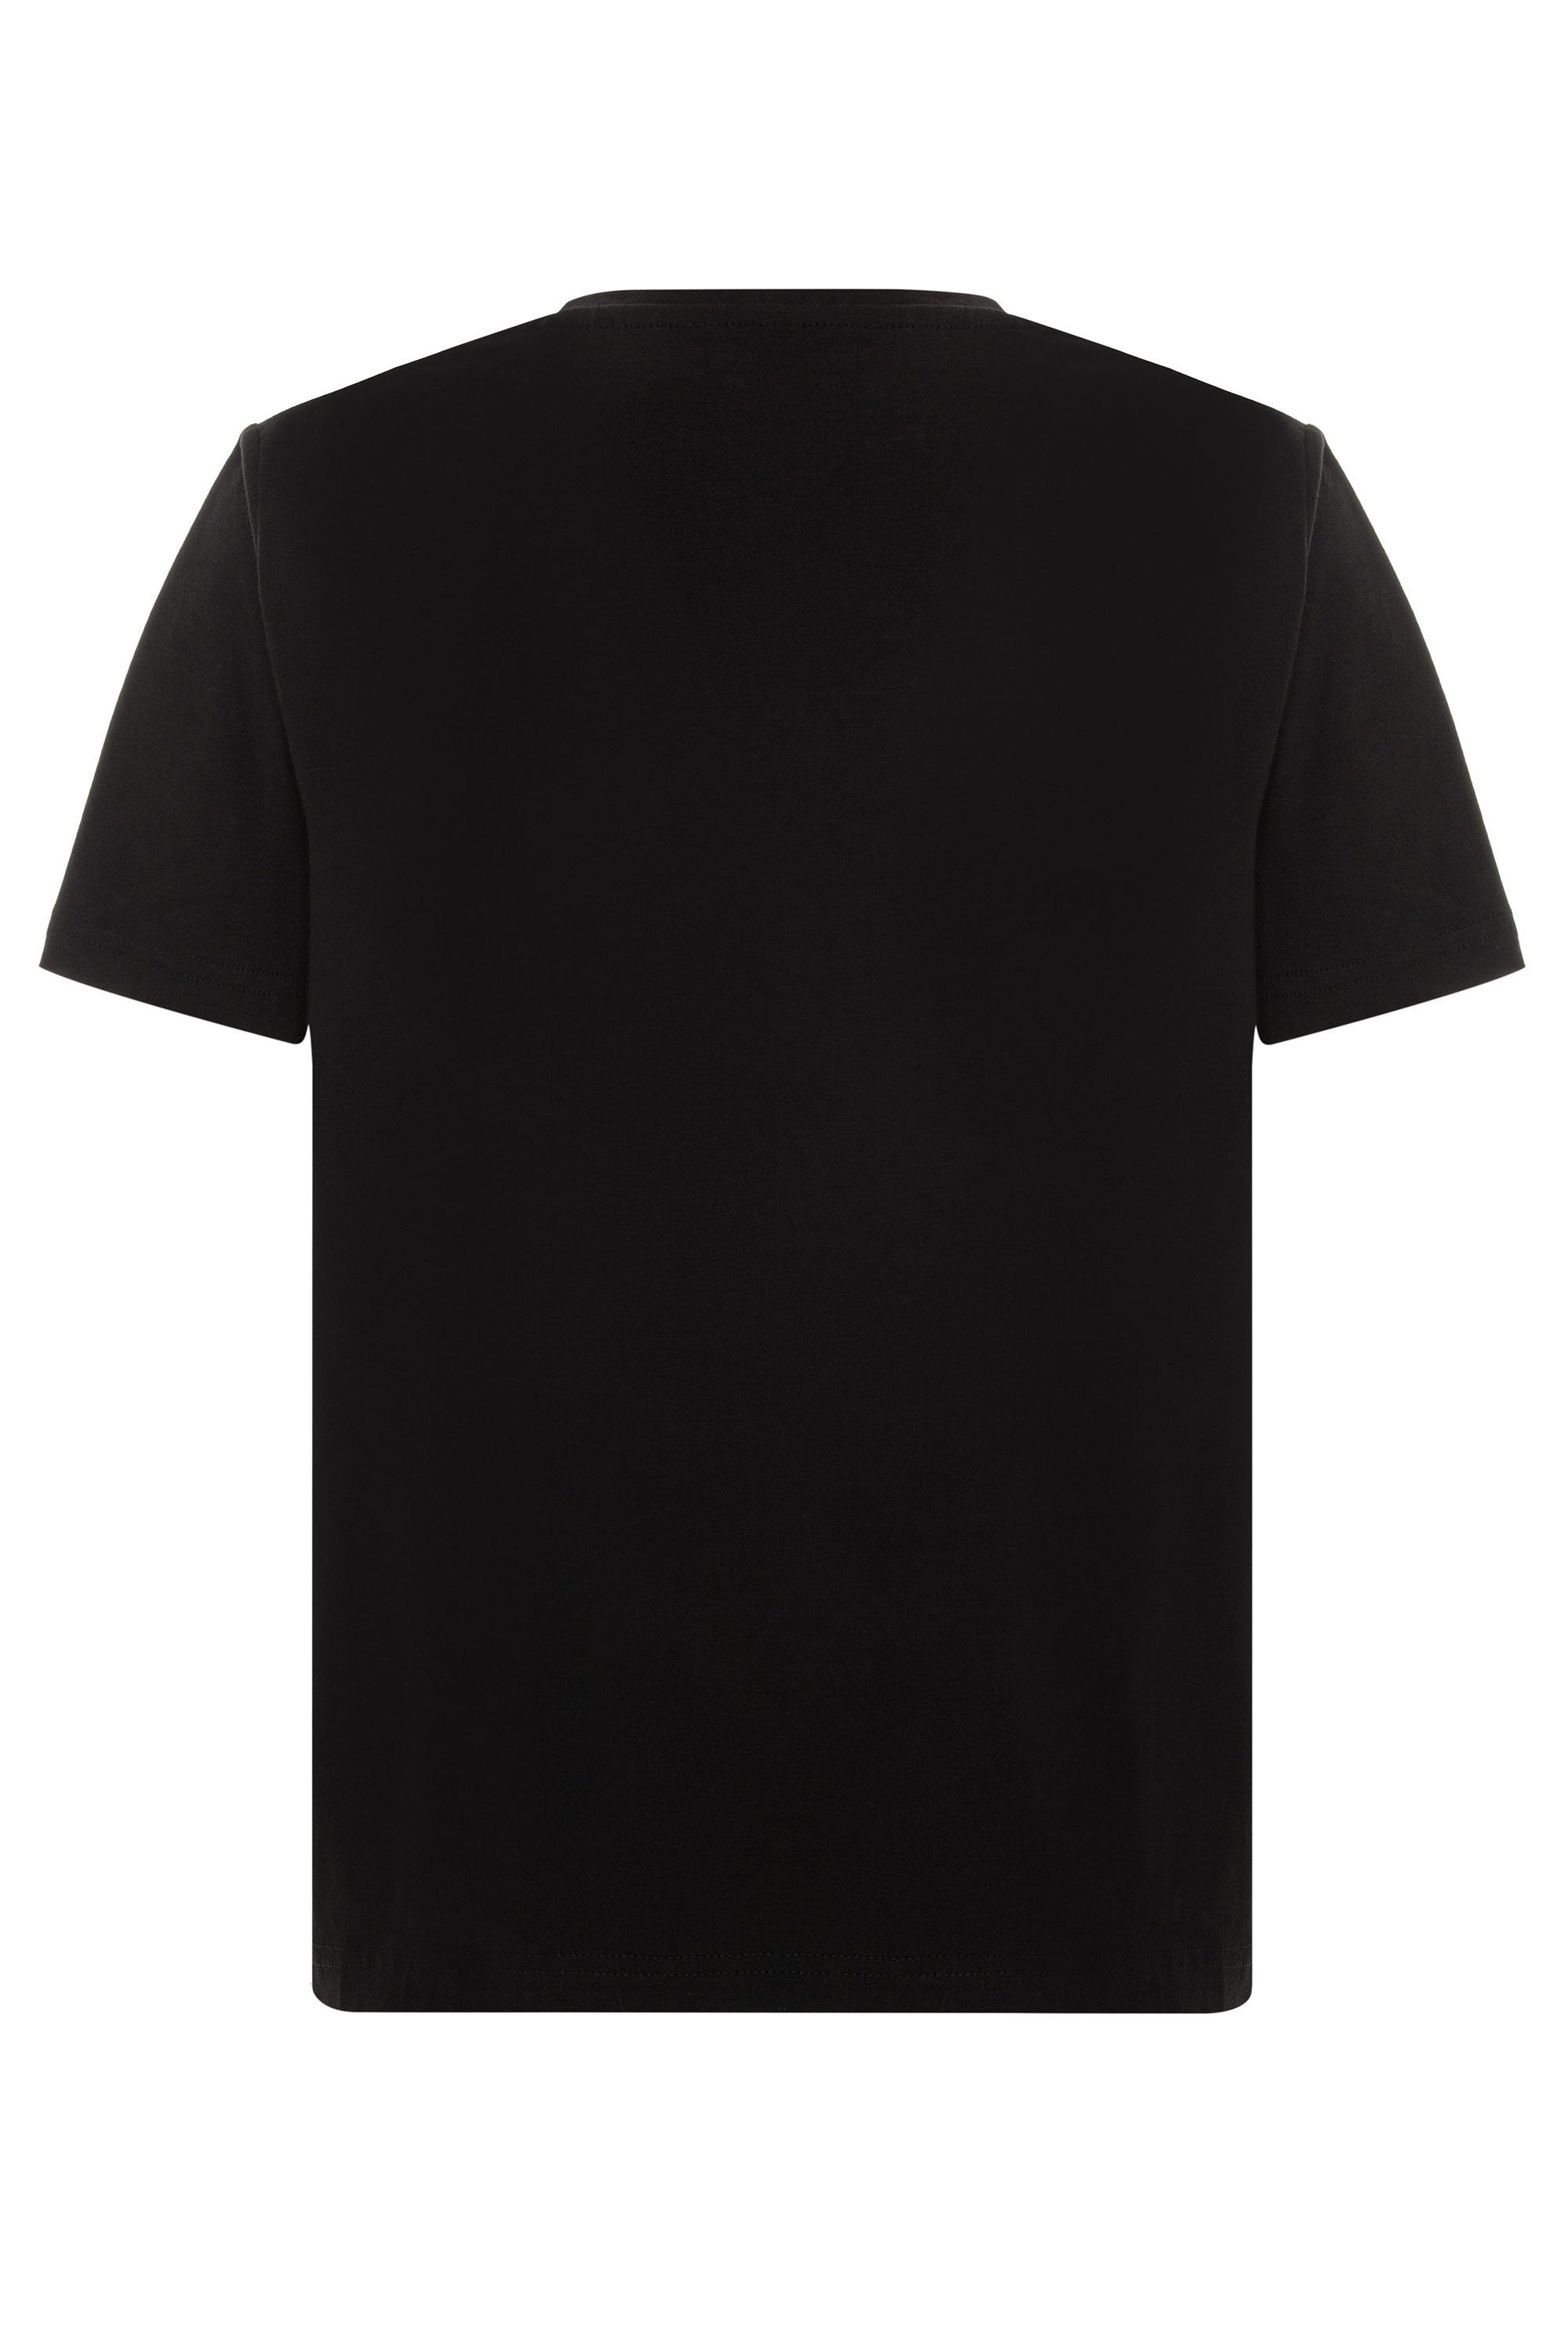 Cipo & Baxx T-Shirt schwarz-weiß mit Print coolem